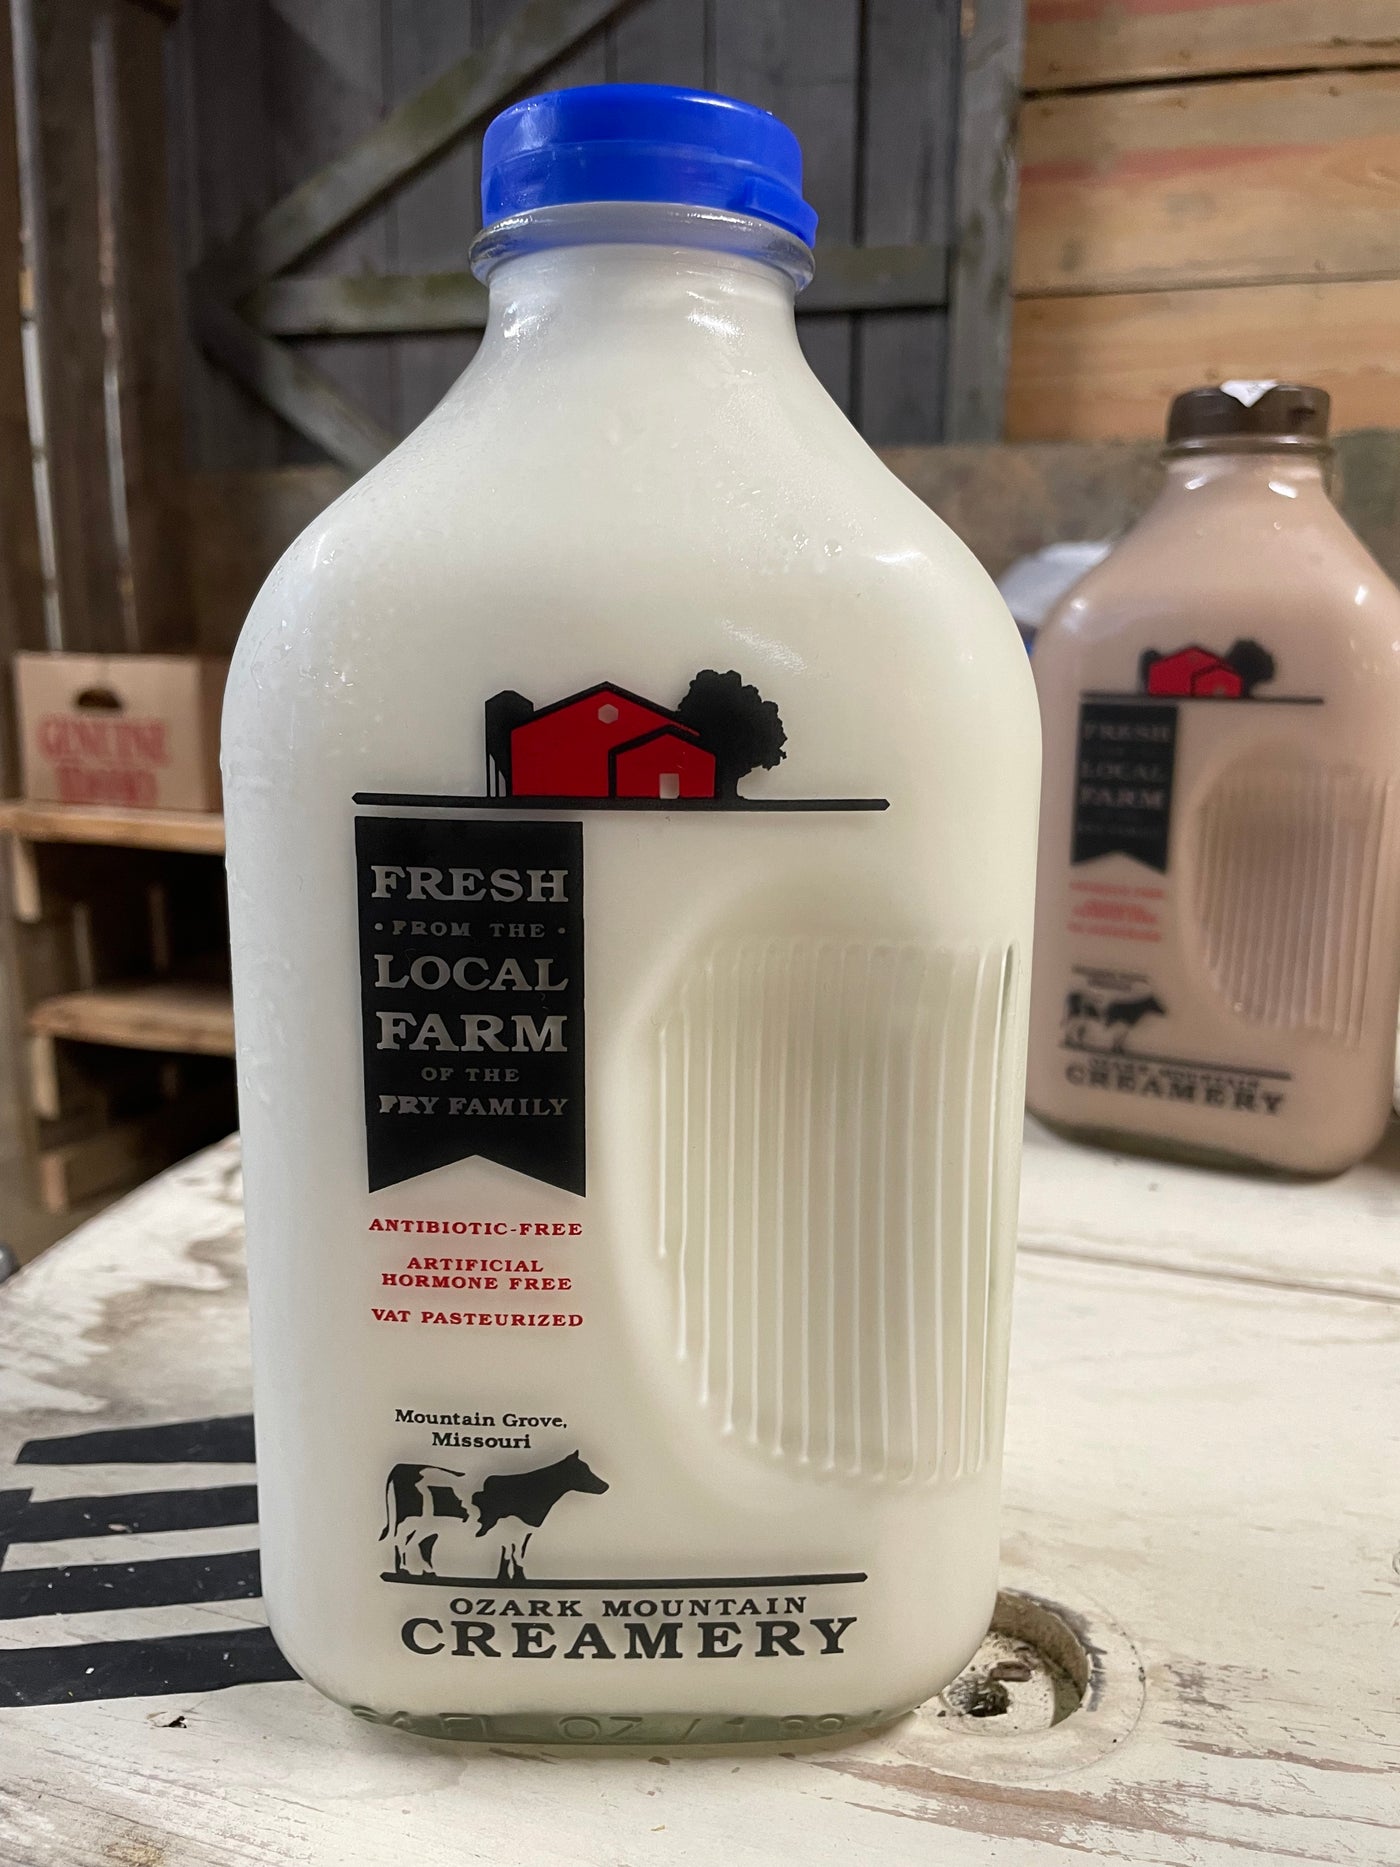 Ozark Mountain Dairy 2% Milk - One Half Gallon Glass Bottle